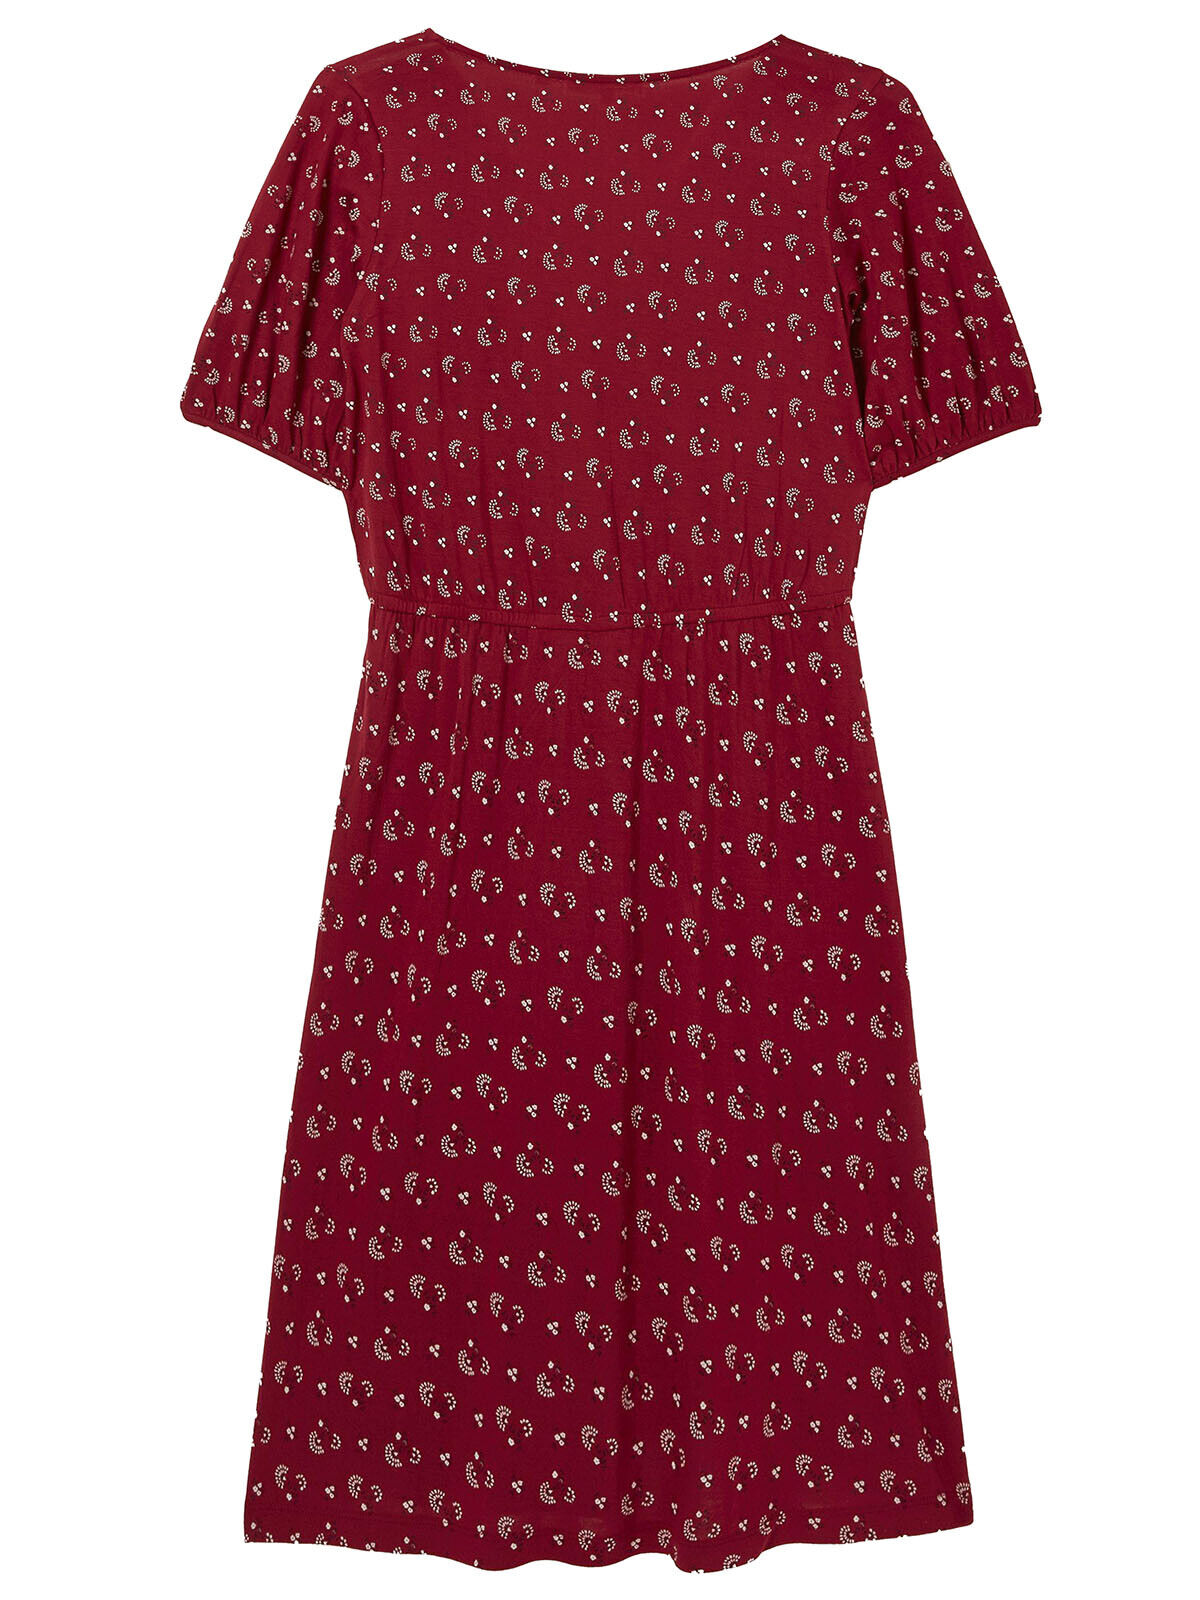 EX Fat Face Claret Iona Batik Posy Short Sleeve Wrap Dress 10, 12, 16 RRP £46